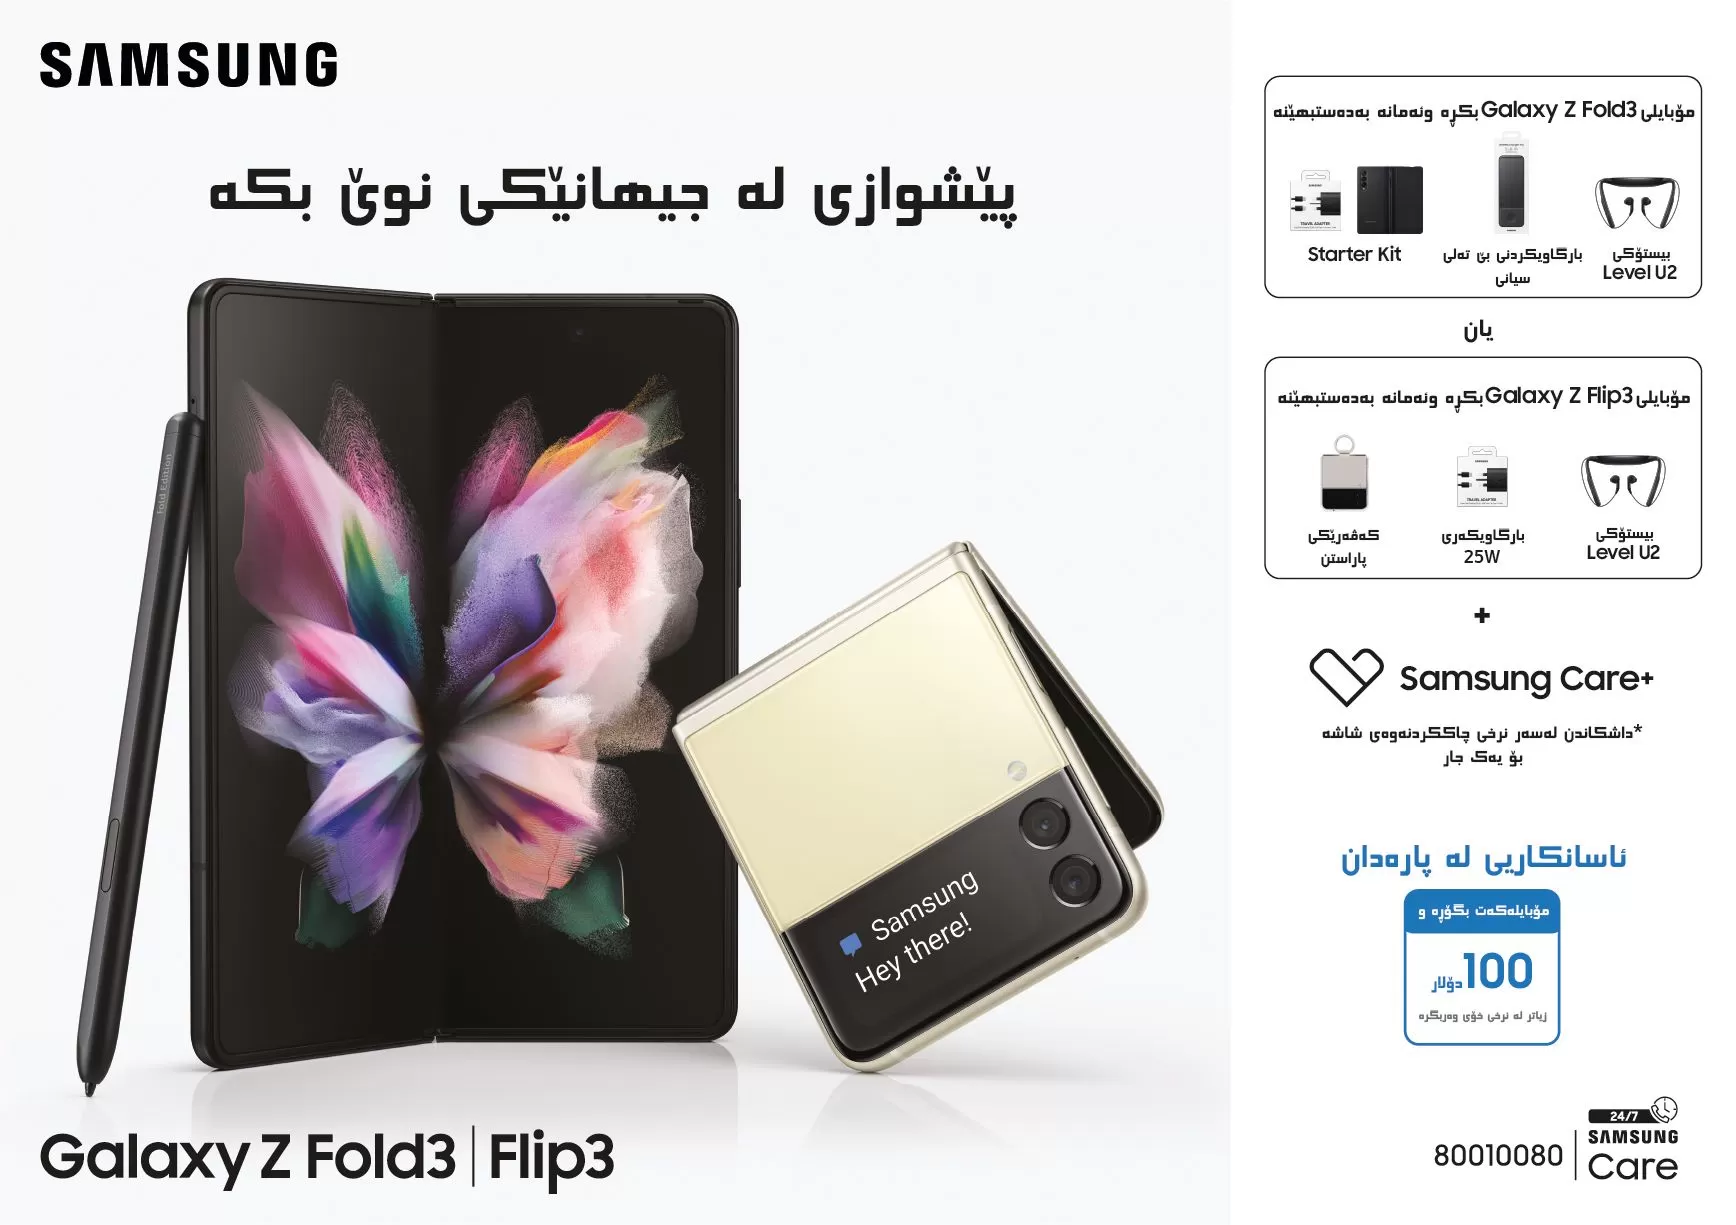 سامسۆنگ دوو مۆبایلی گالاکسی Z Fold3 وZ Flip3 5G دەخاتە روو